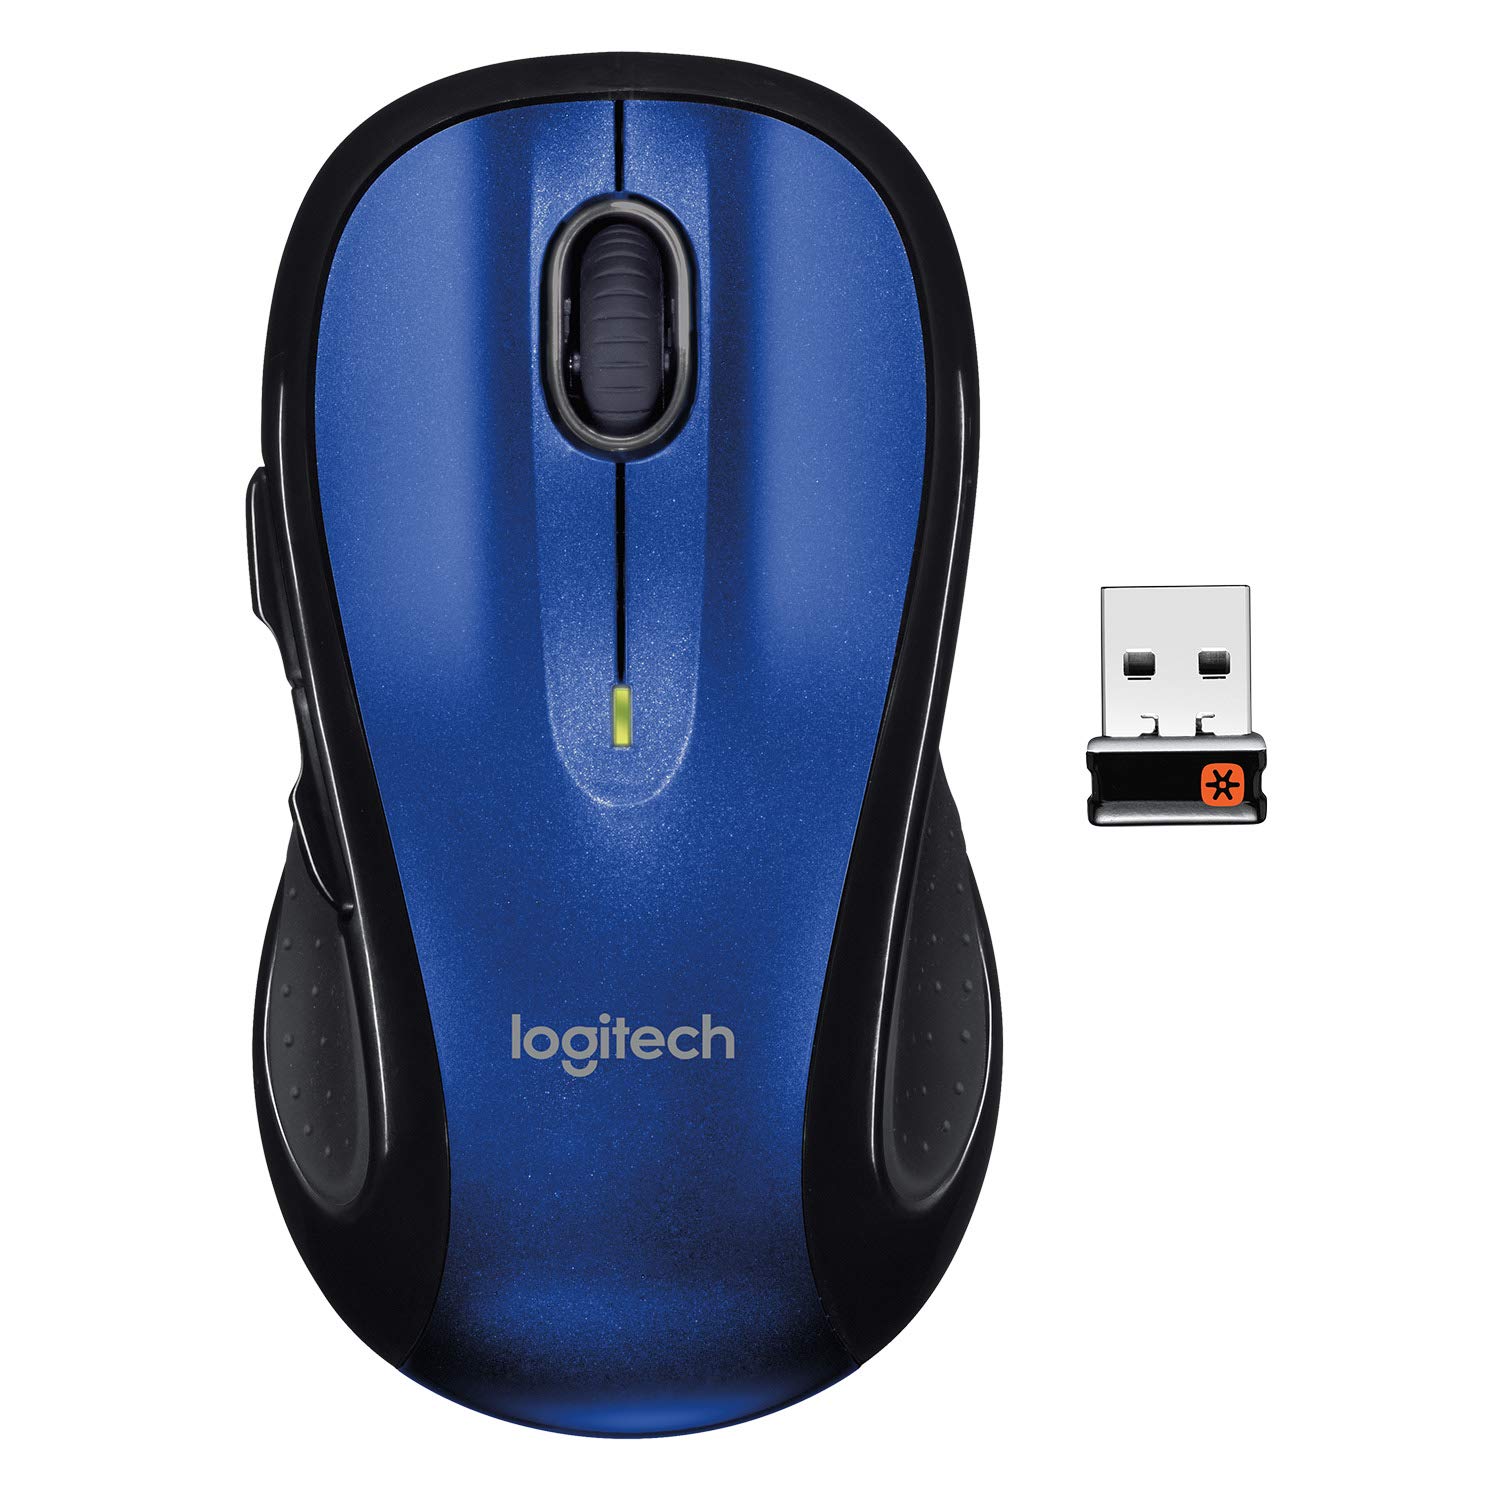 Logitech M510 Wireless Mouse, Blue (Renewed)